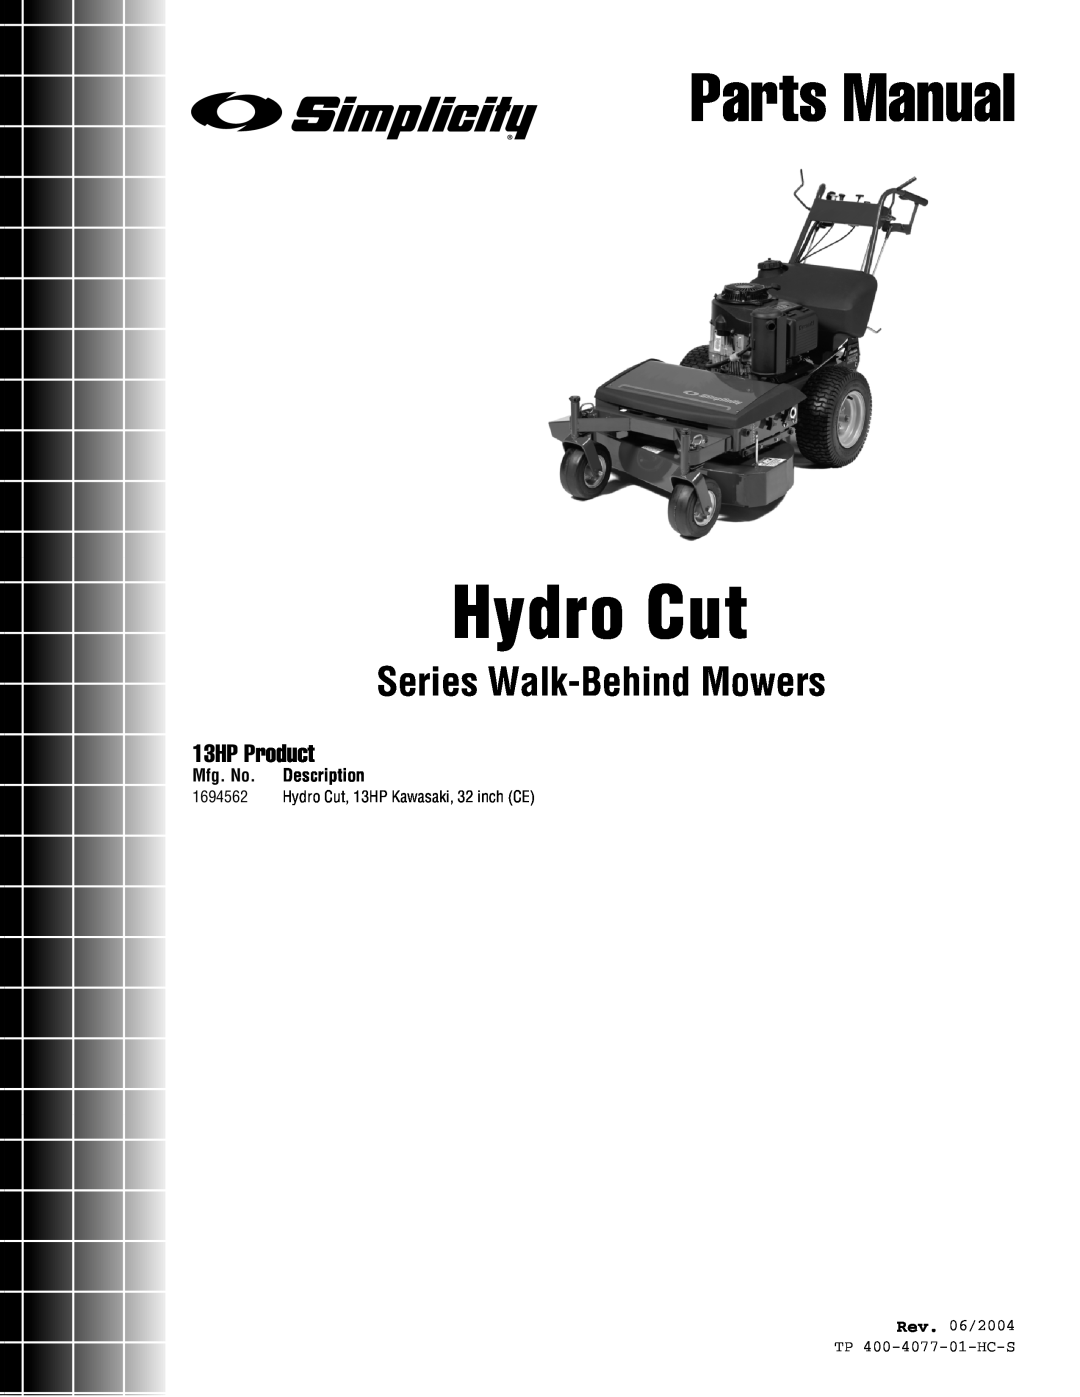 Simplicity Hydro Cut Series, 1694562 manual Parts Manual, Series Walk-BehindMowers, 13HP Product, Mfg. No. Description 